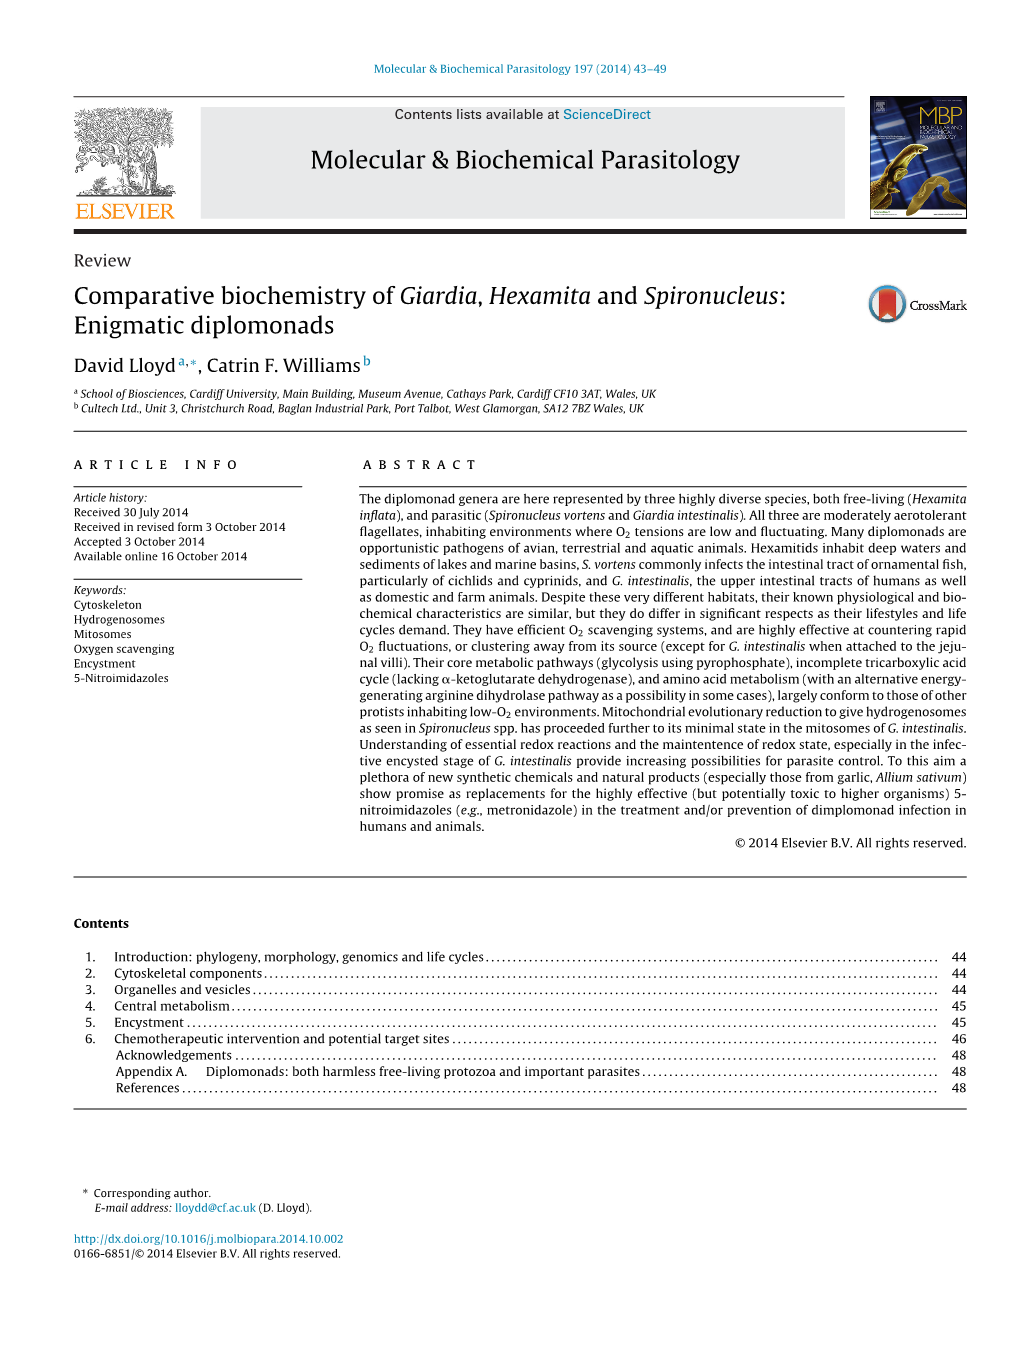 Comparative Biochemistry of Giardia, Hexamita and Spironucleus